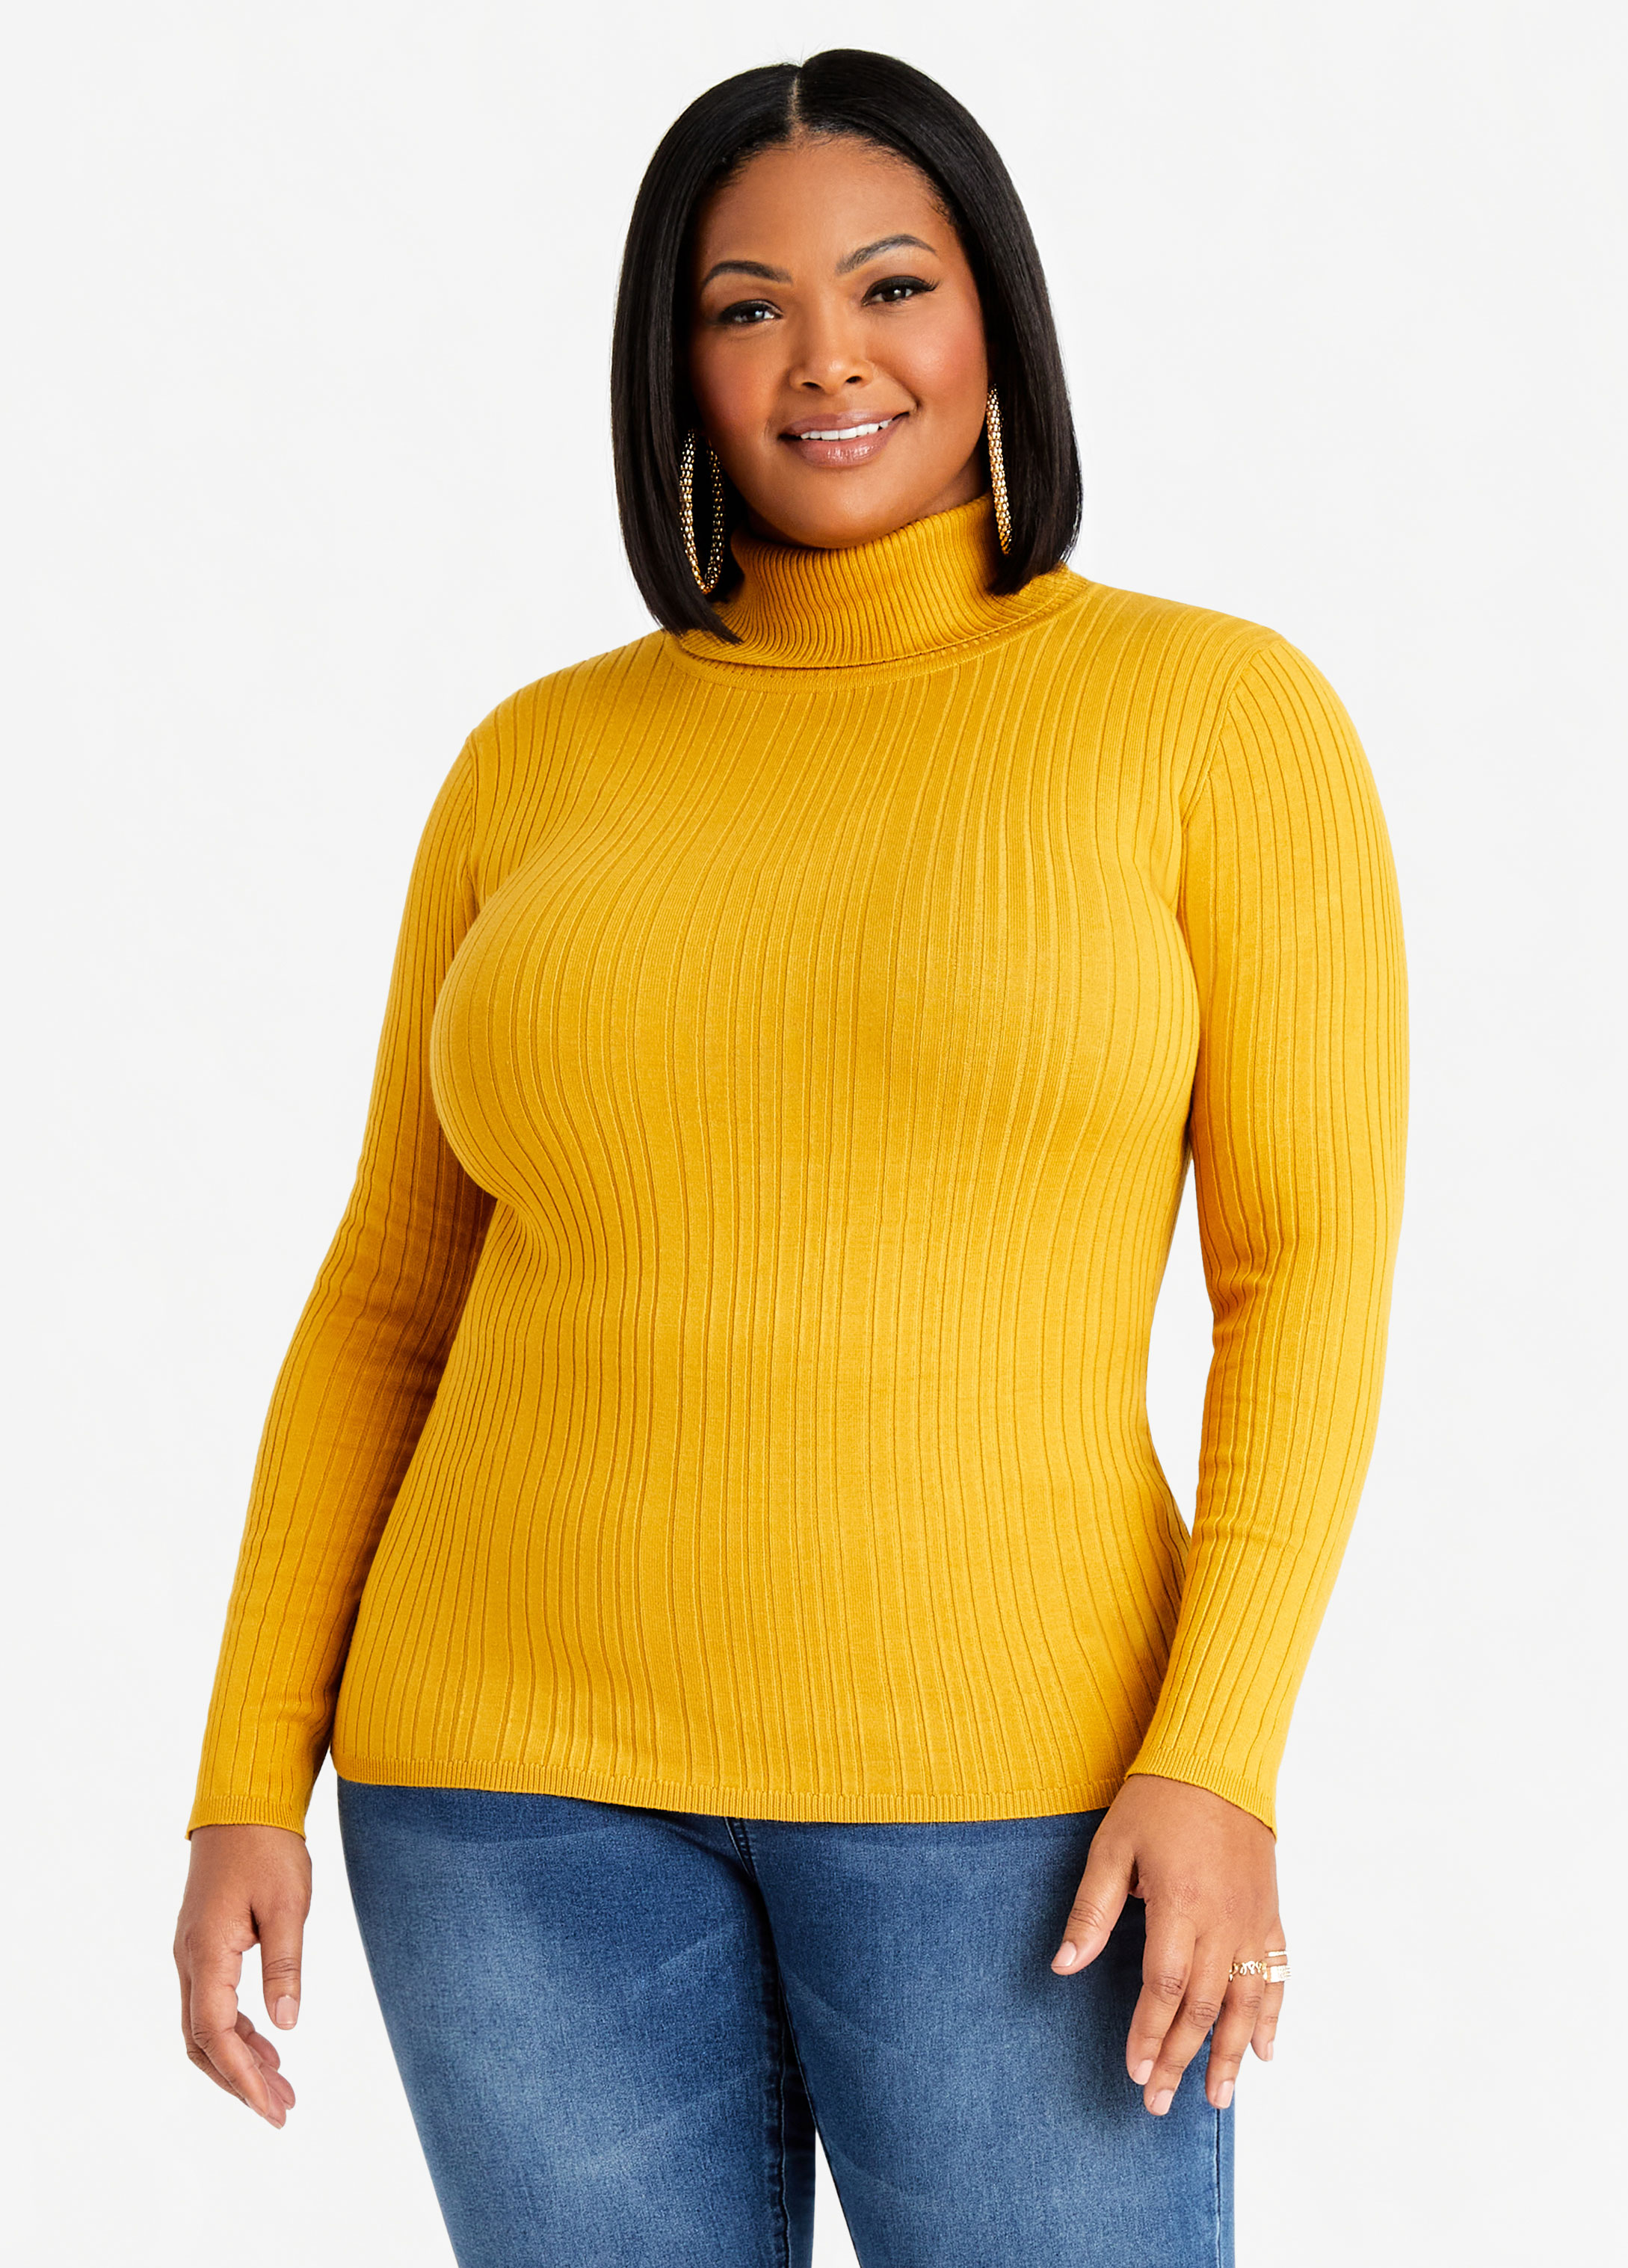 Plus Size Turtlenecks For Women In Many Colors Cute Plus Size Sweaters